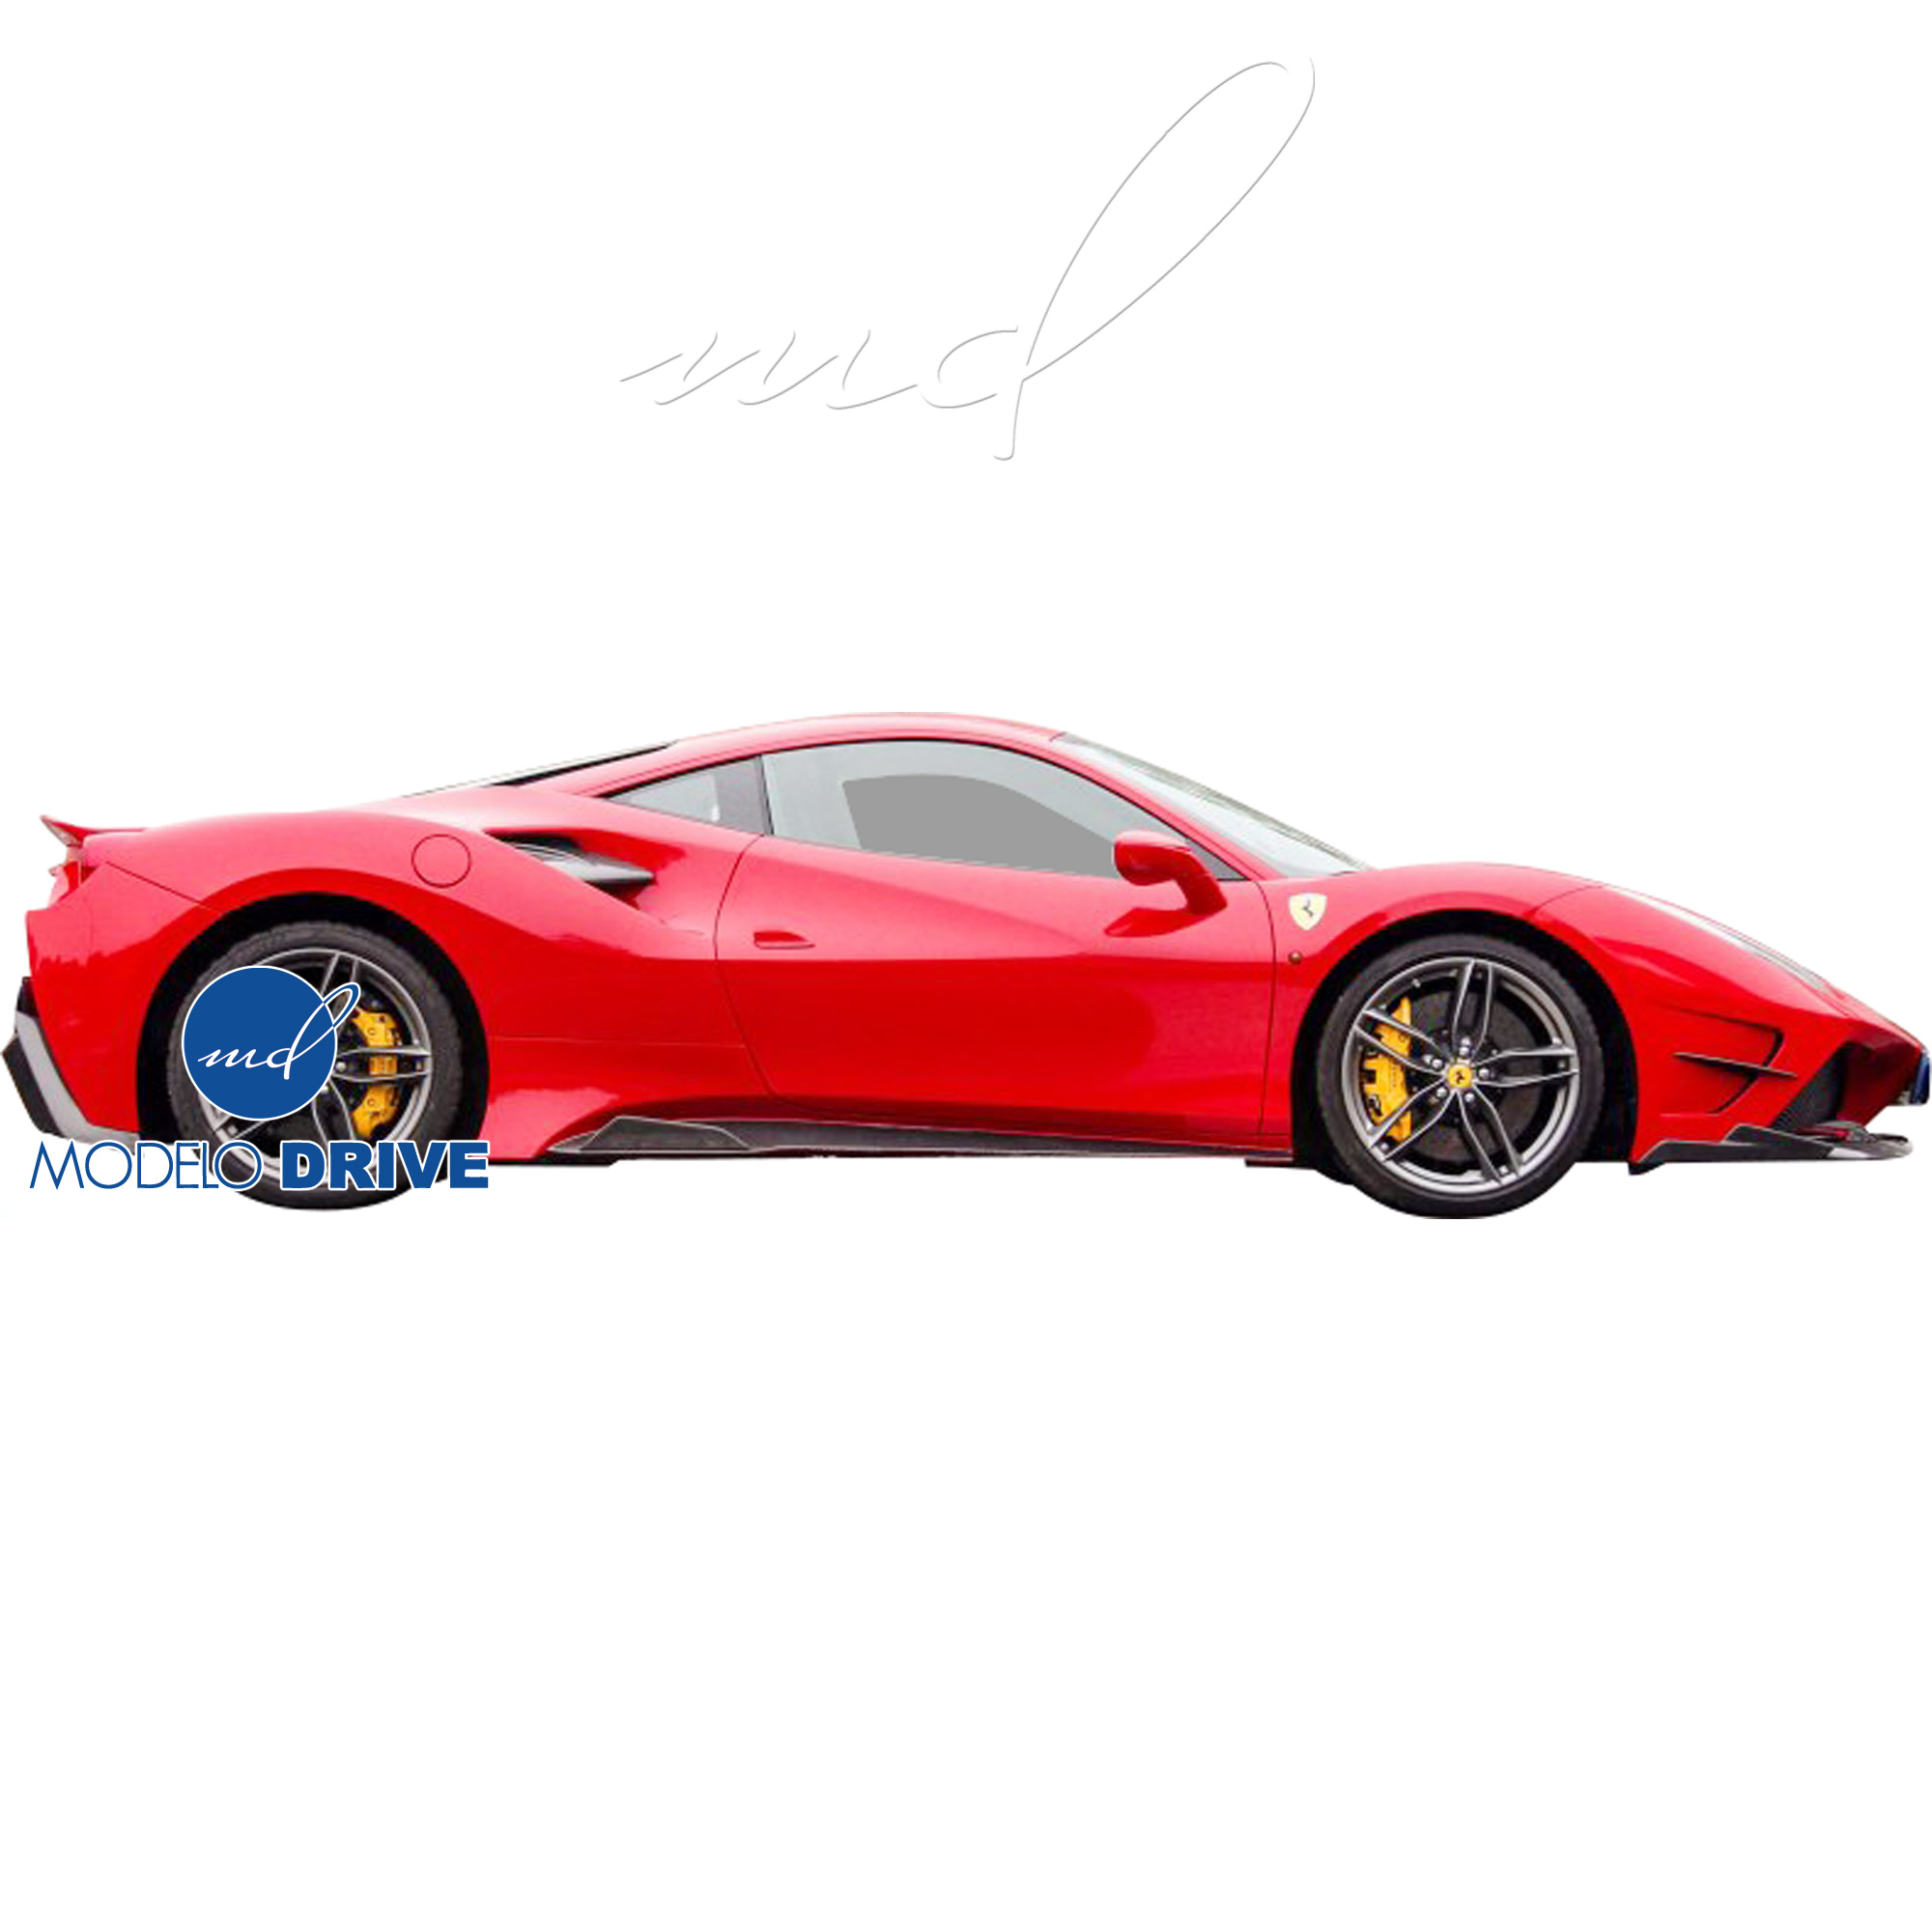 ModeloDrive Partial Carbon Fiber MDES Side Skirts > Ferrari 488 GTB F142M 2016-2019 - Image 11